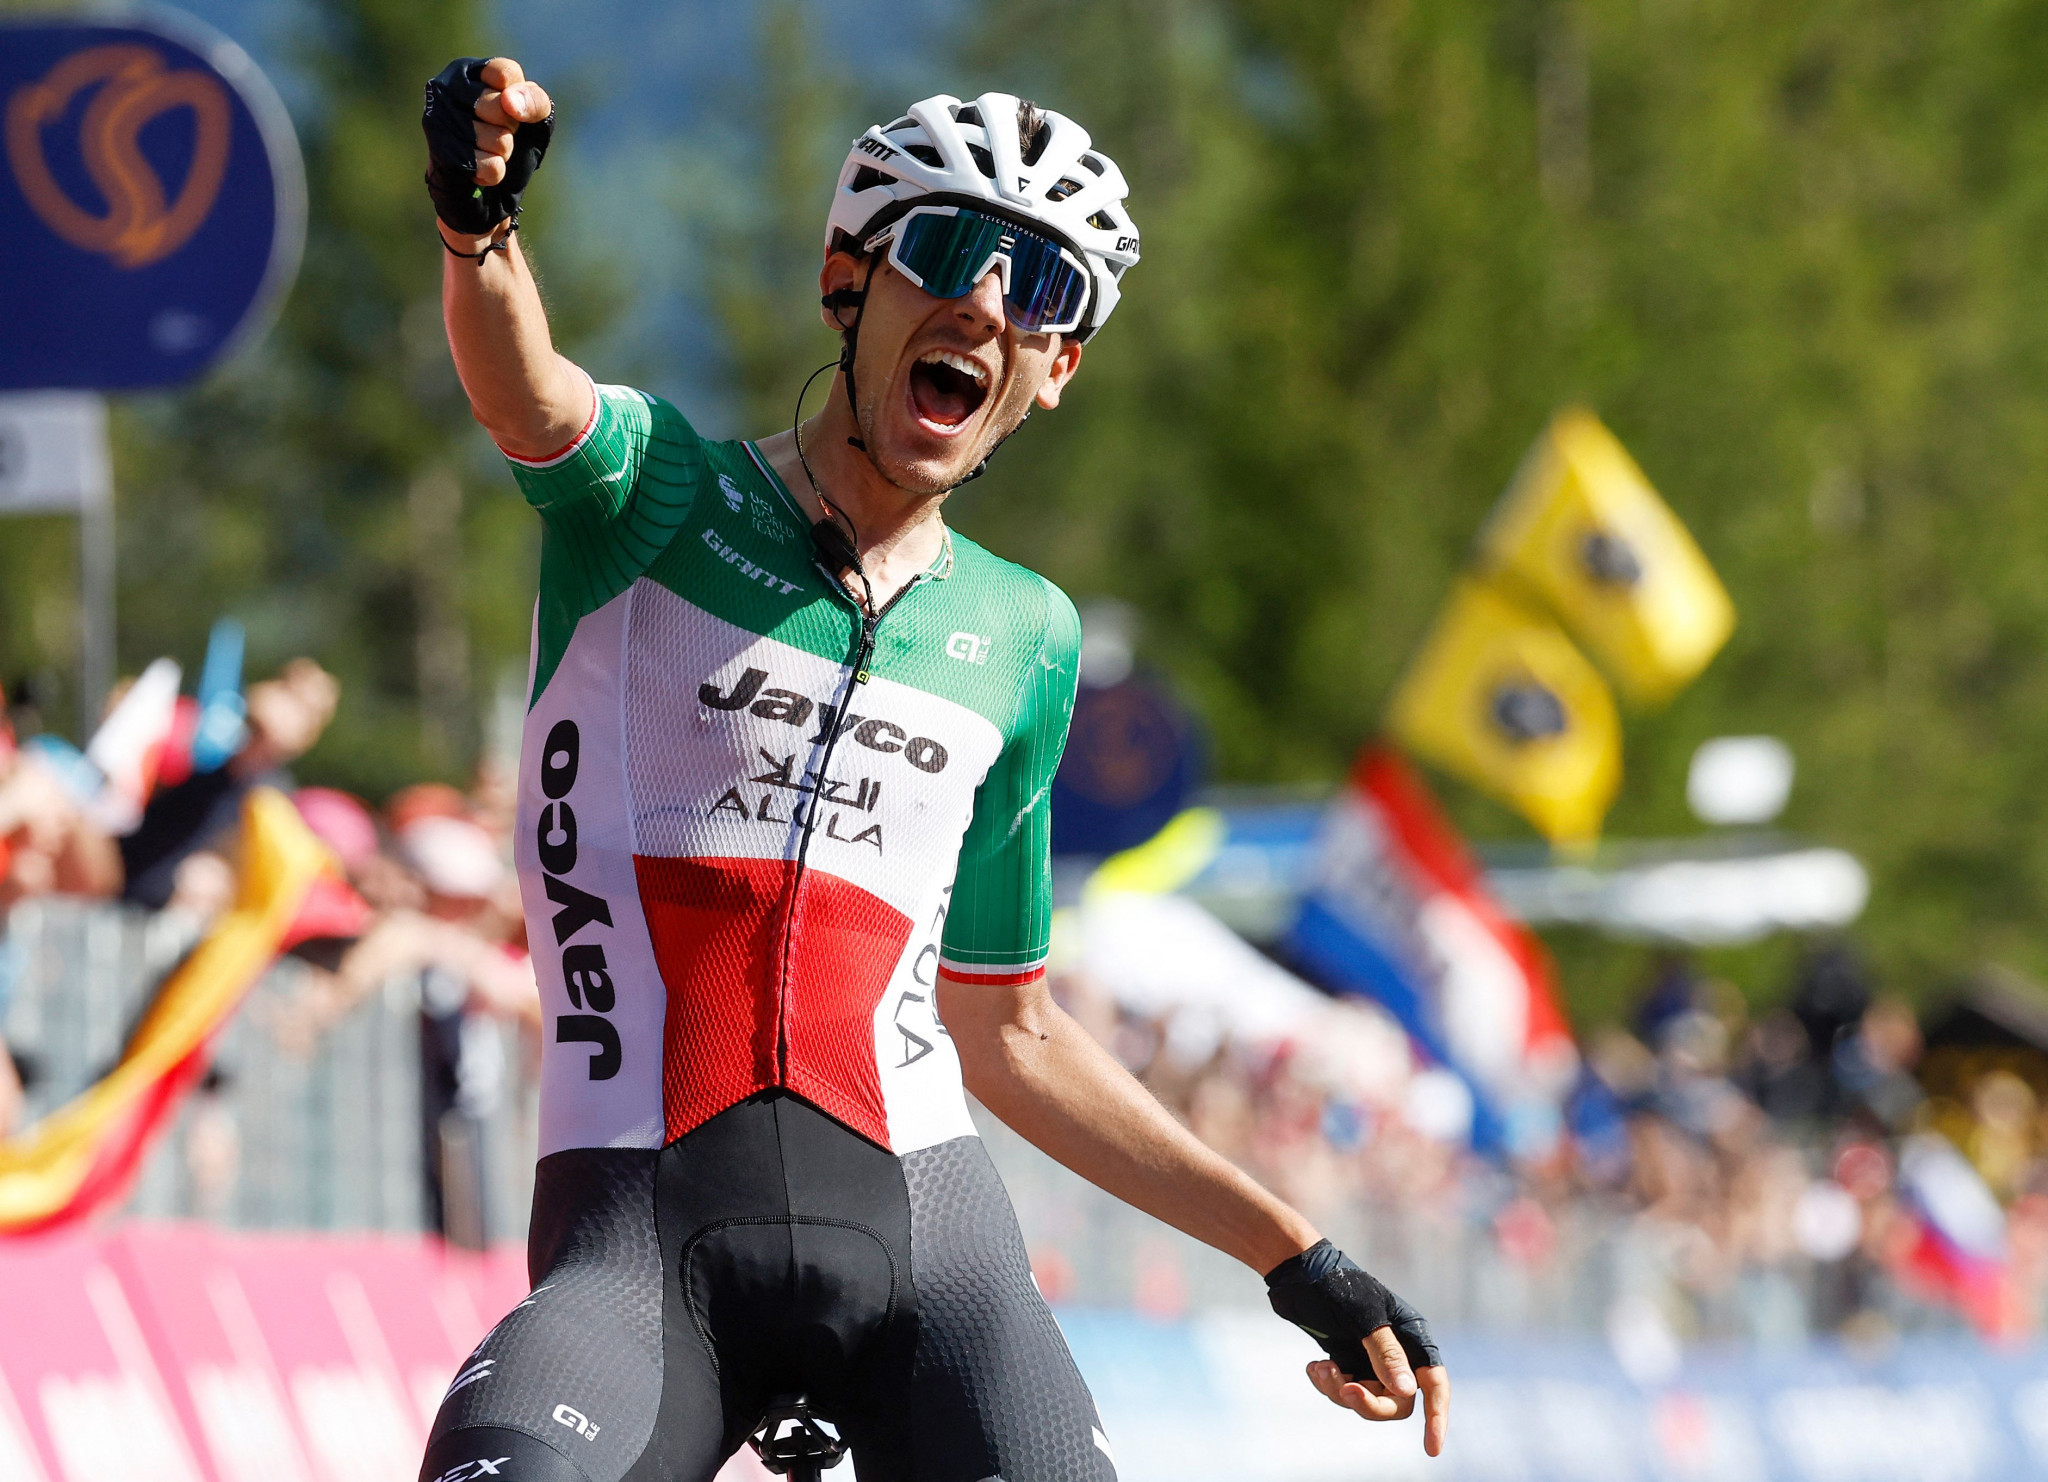 Filippo Zana prevailed in stage 18 of the Giro d'Italia ©Getty Images